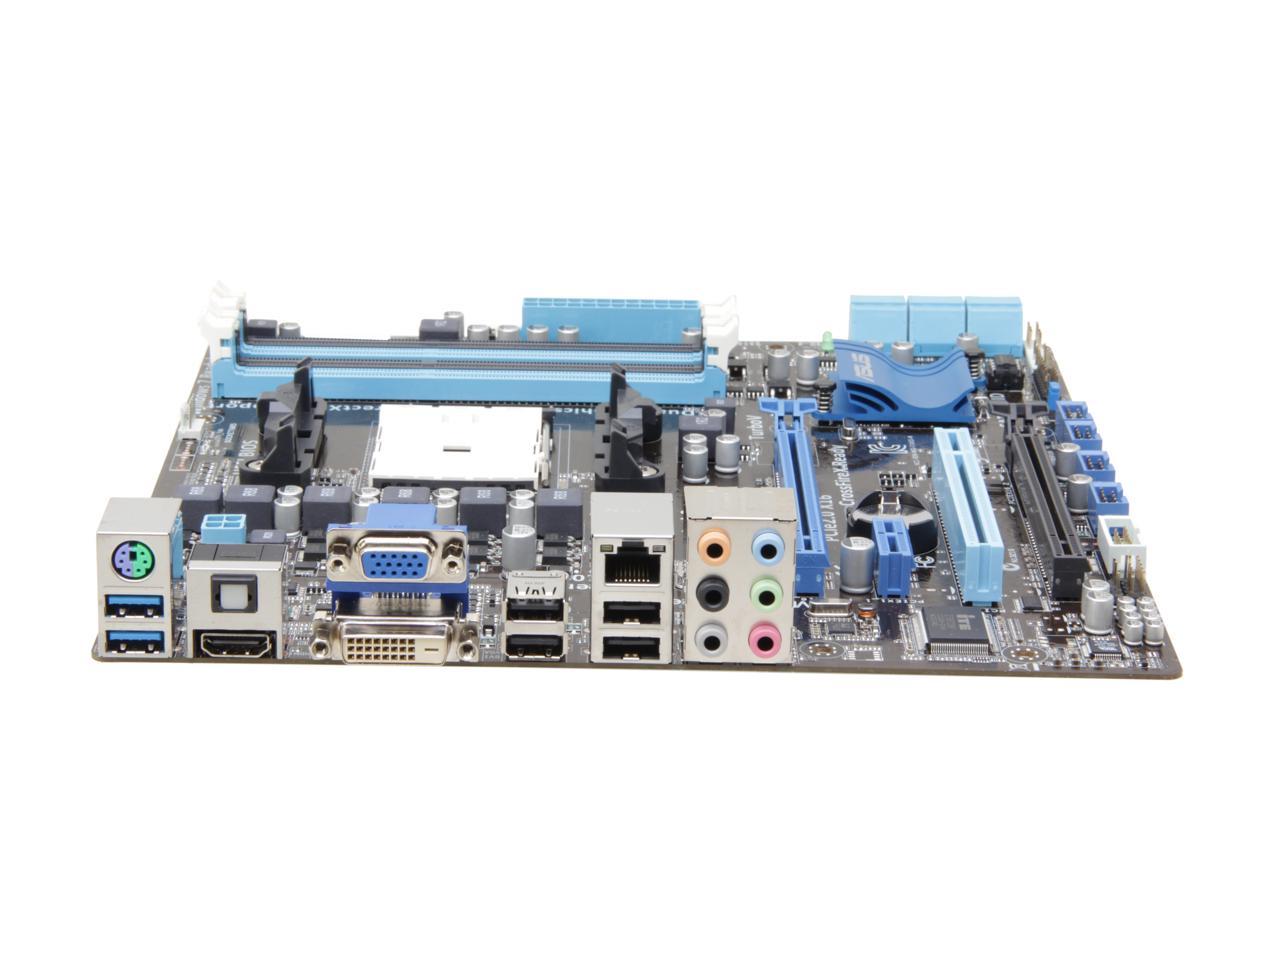 ASUS F1A55-M/CSM FM1 AMD A55 (Hudson D2) USB 3.0 HDMI Micro ATX AMD Motherboard with UEFI BIOS